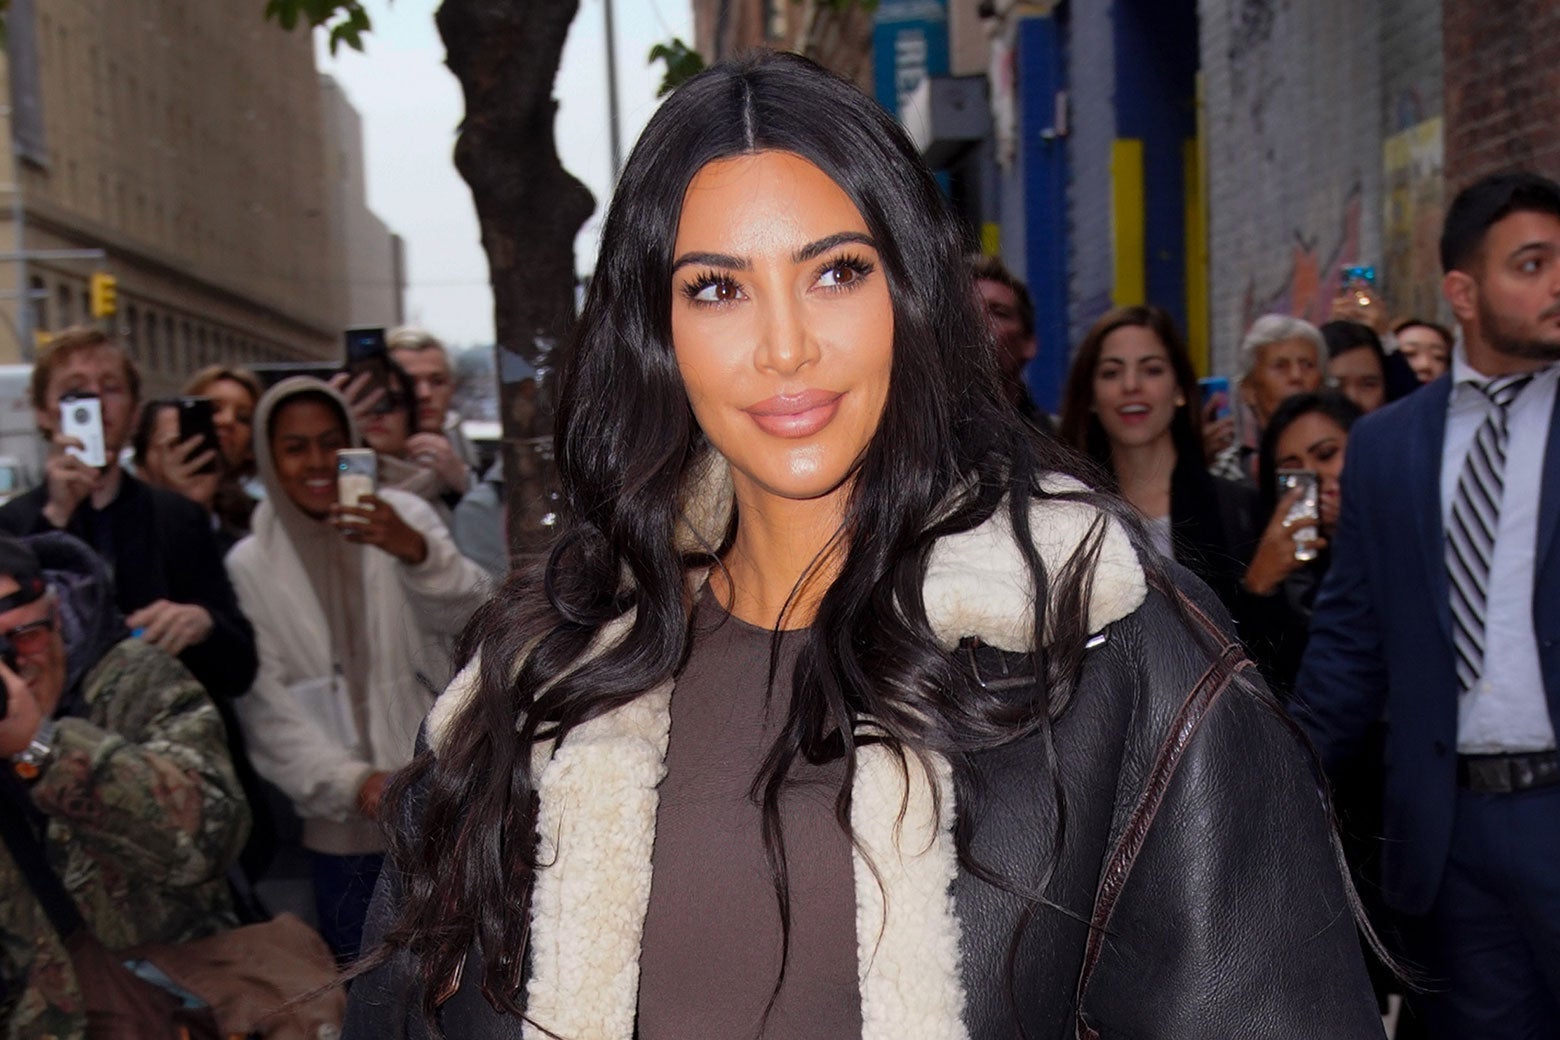 Fans snap photos of Kim Kardashian West on the street.